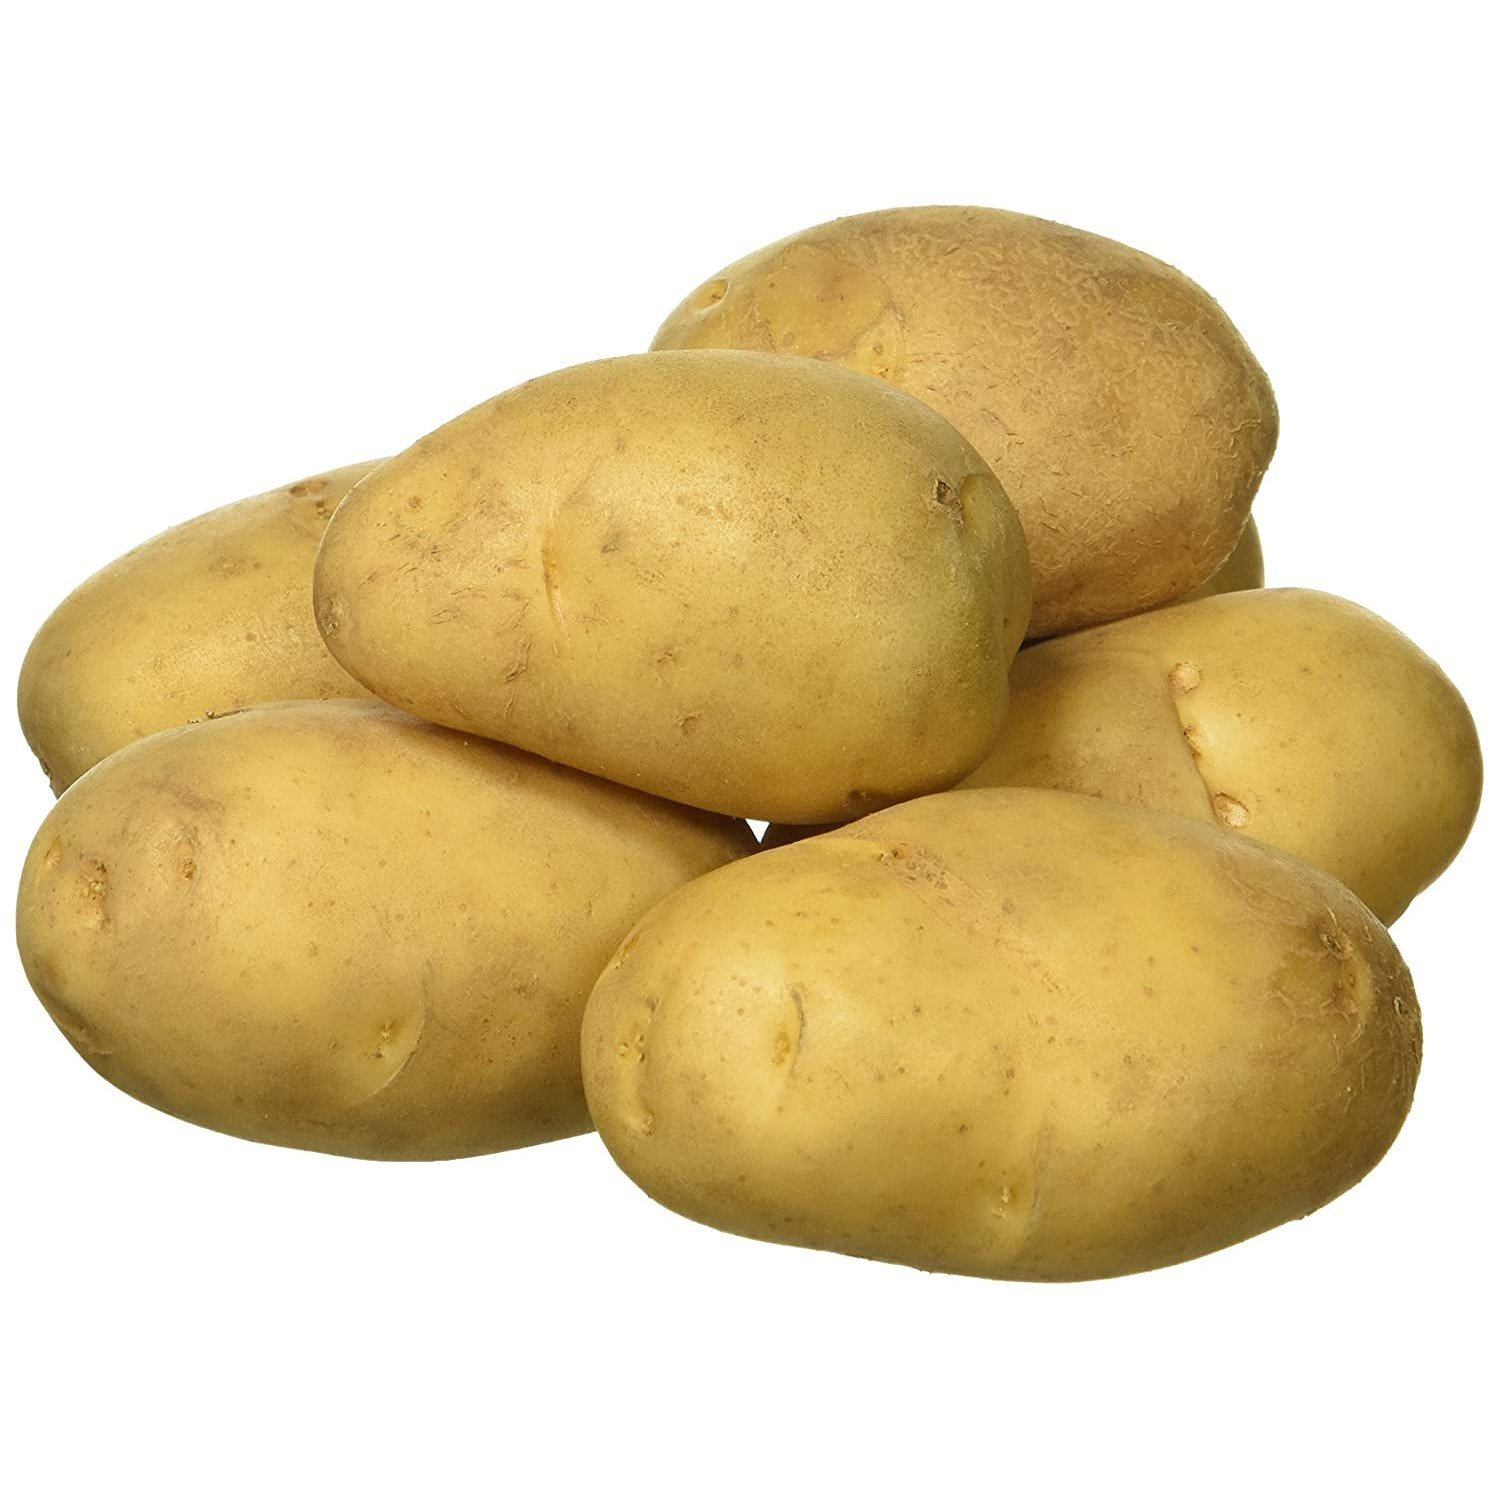 Large Bag Potatoes 3 kg